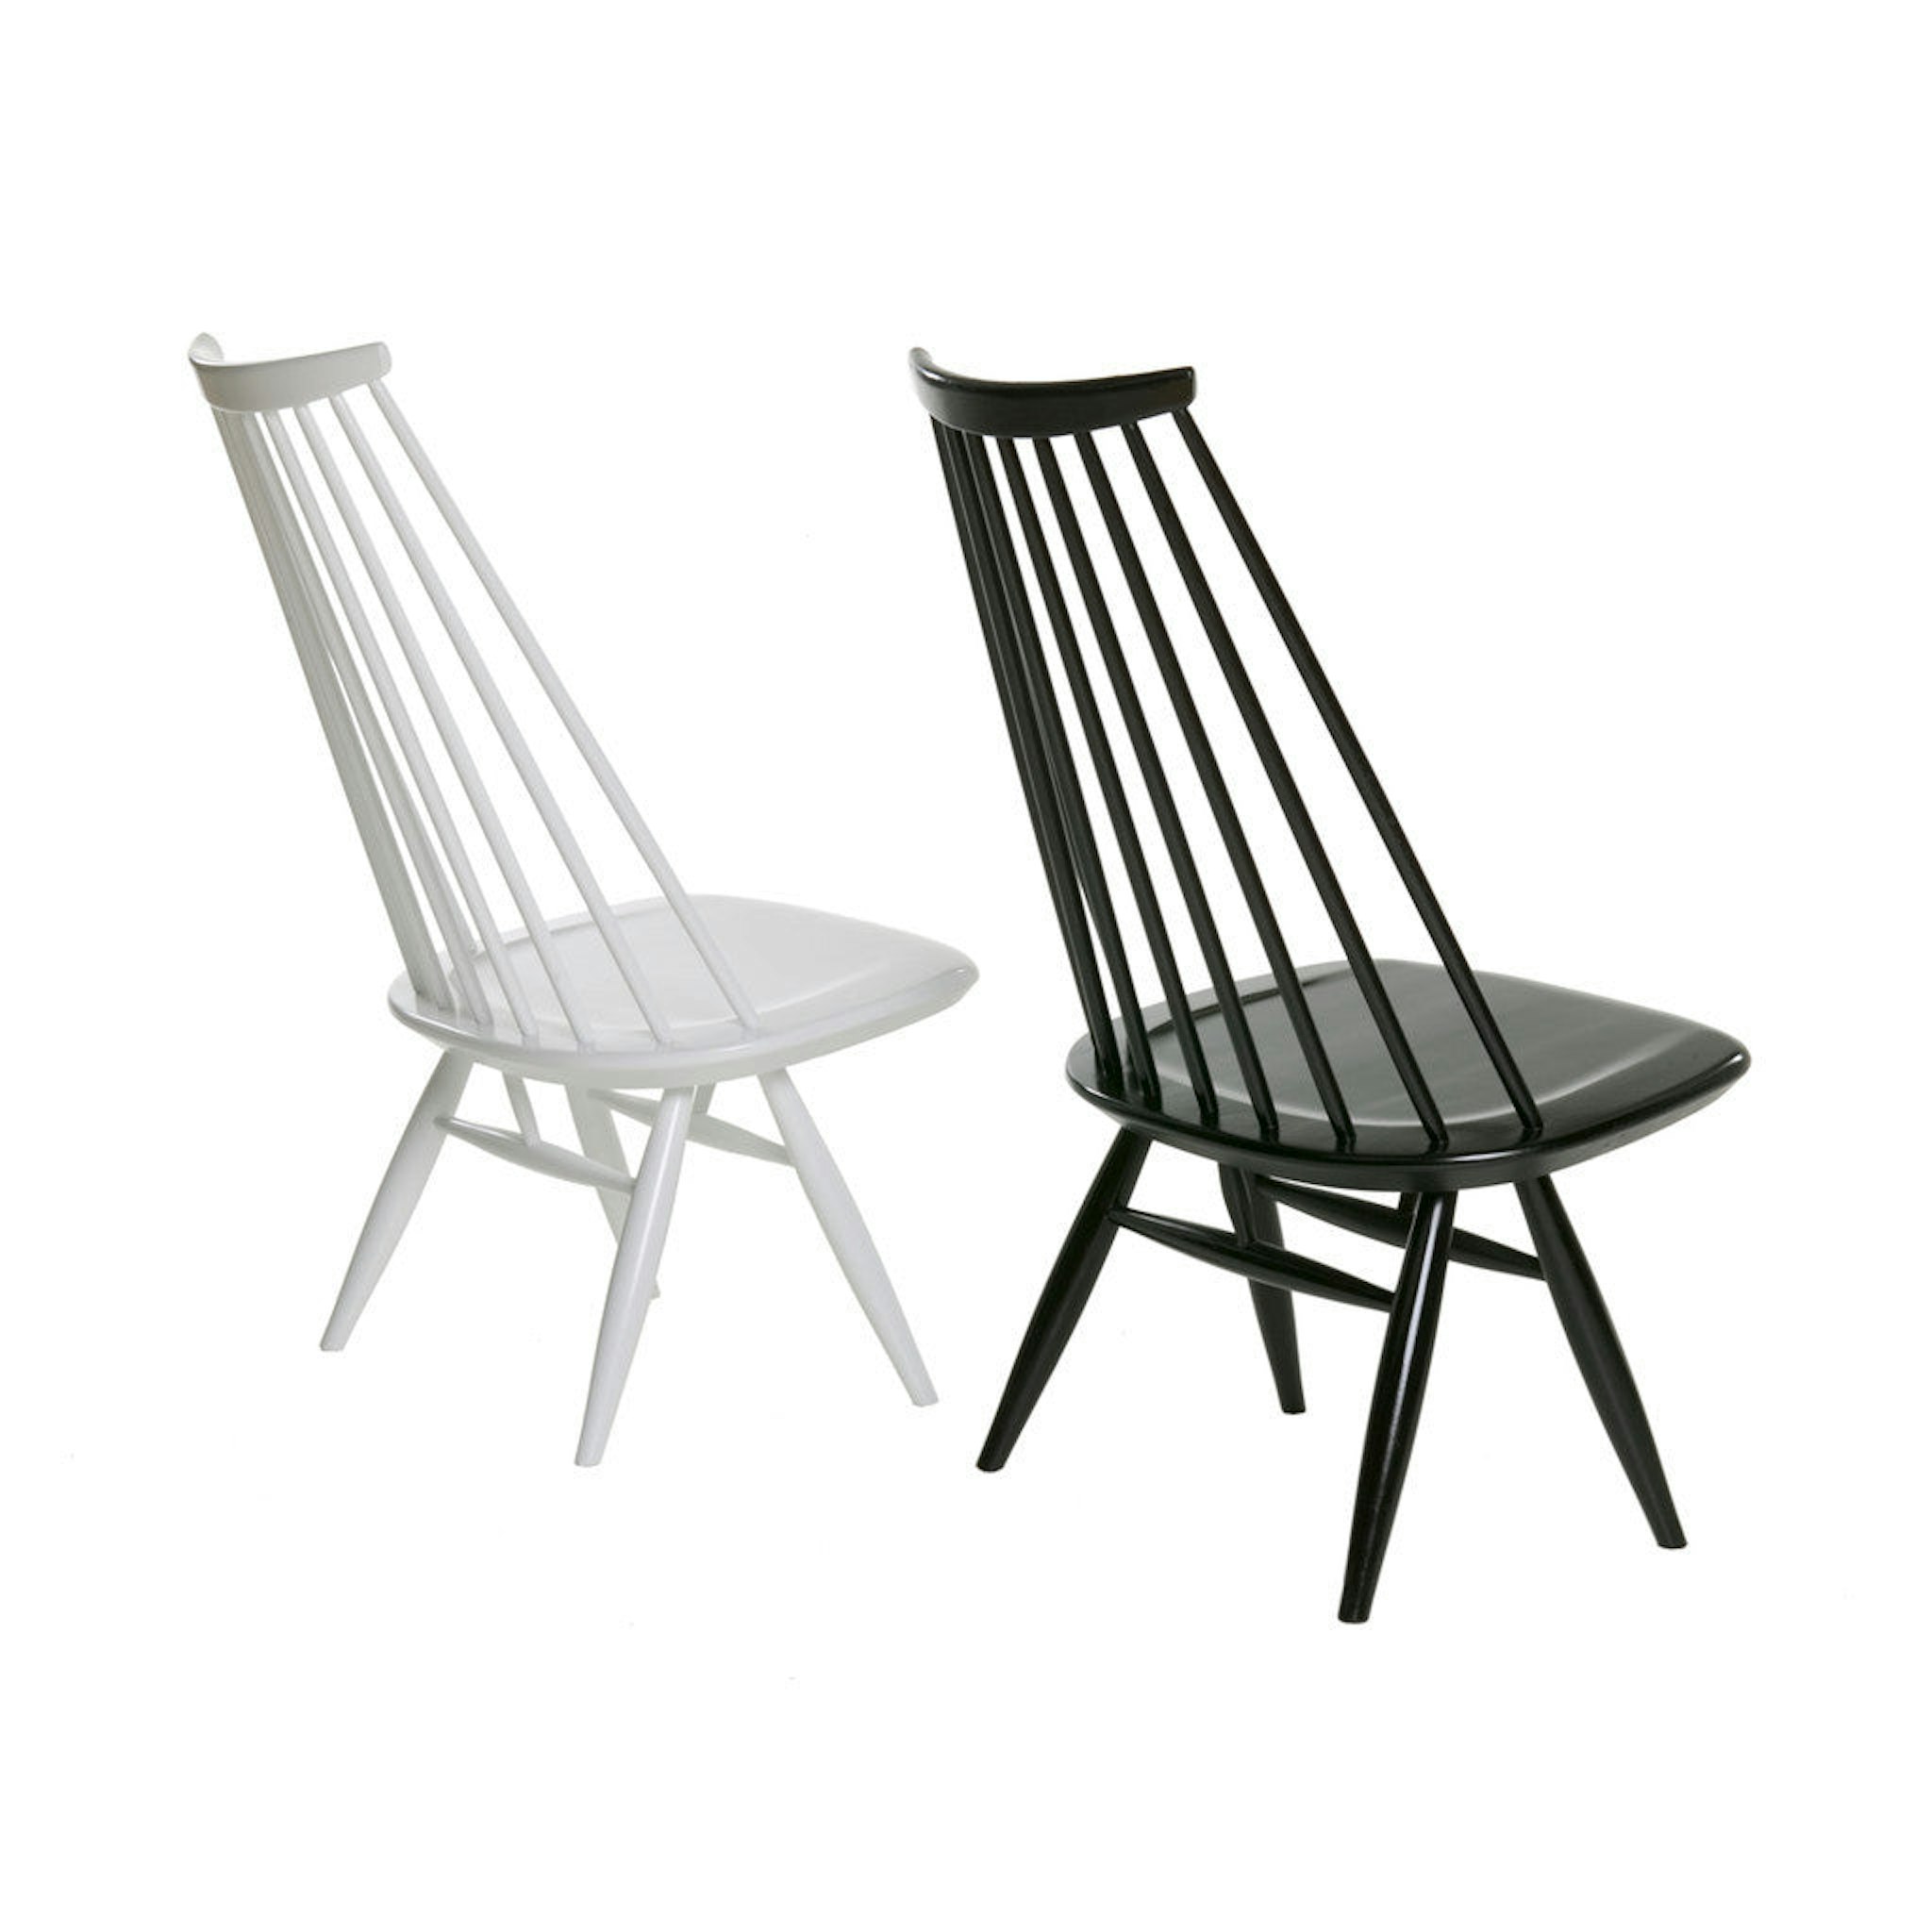 Mademoiselle Lounge Chair by Artek